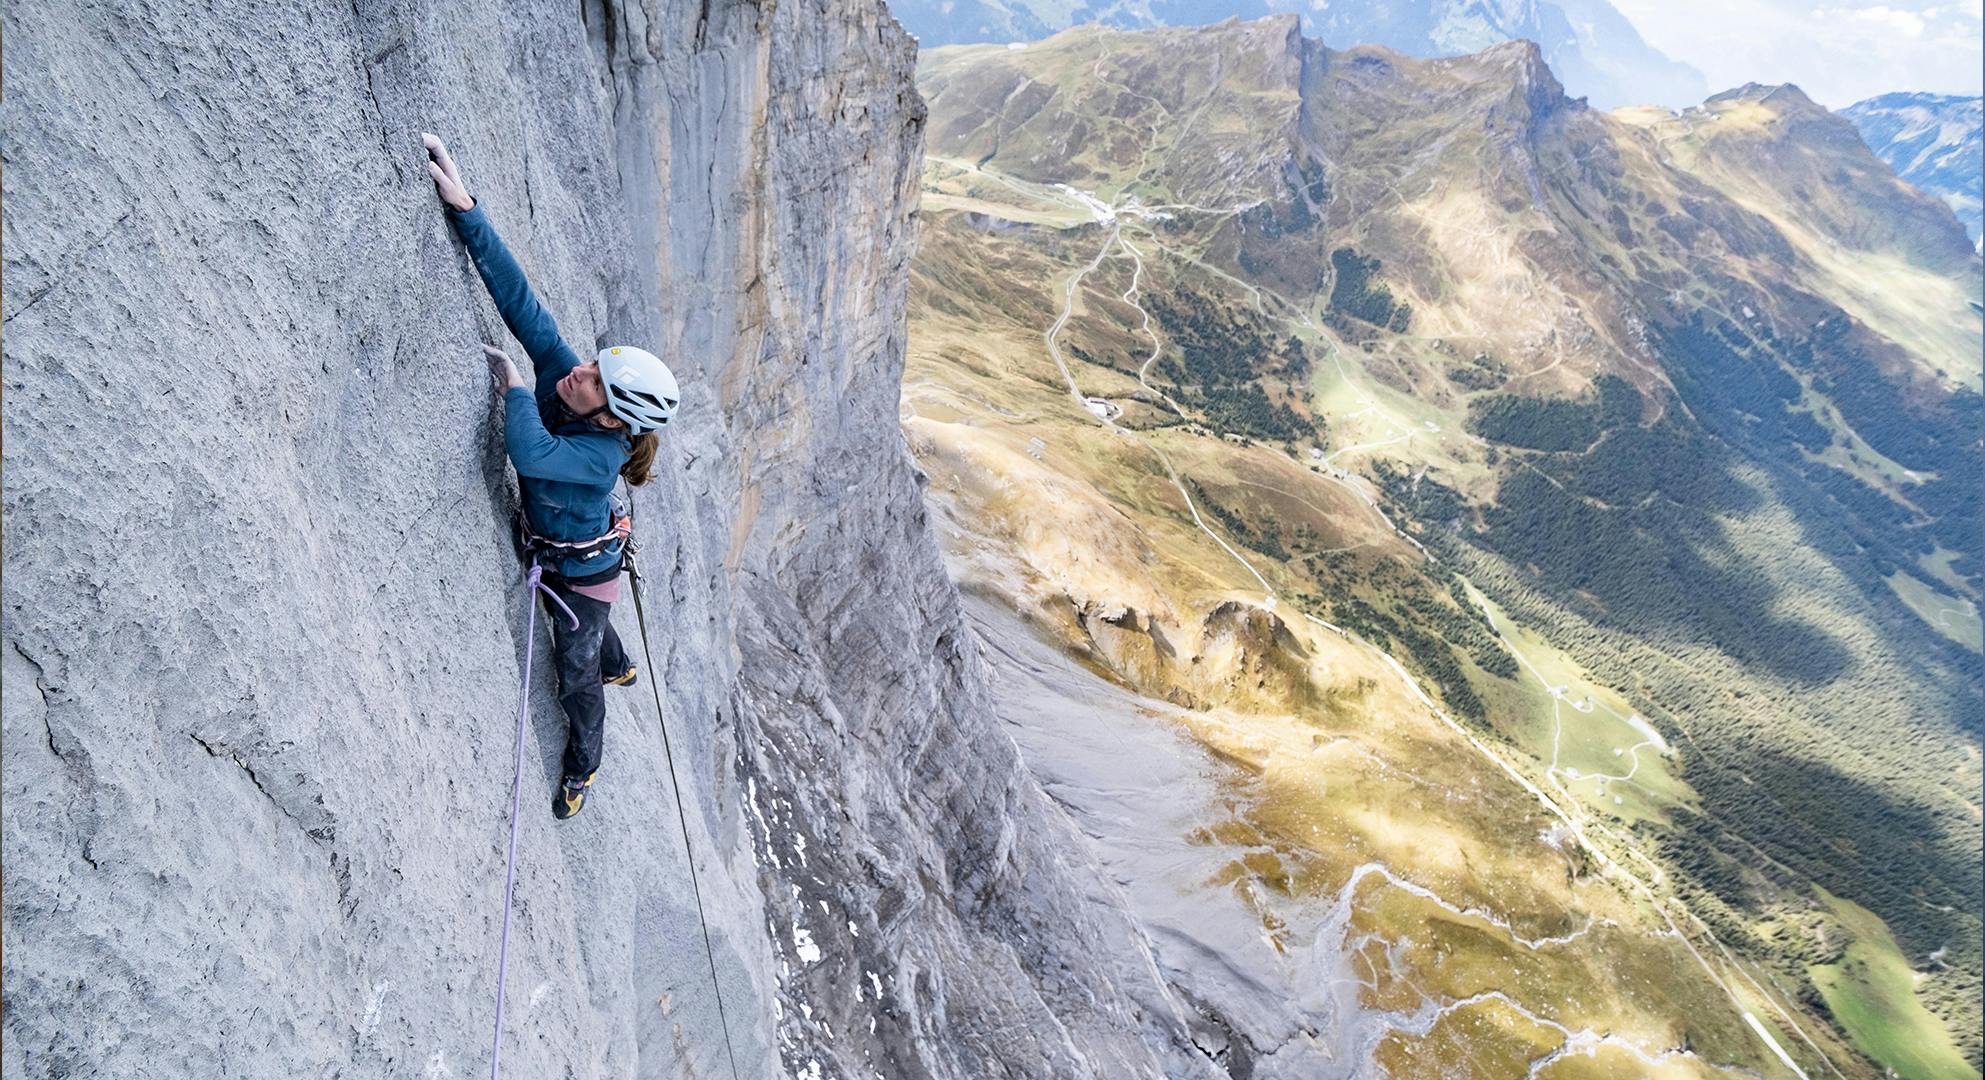 Black Diamond athlete Babsi Zangerl climbing the Eiger